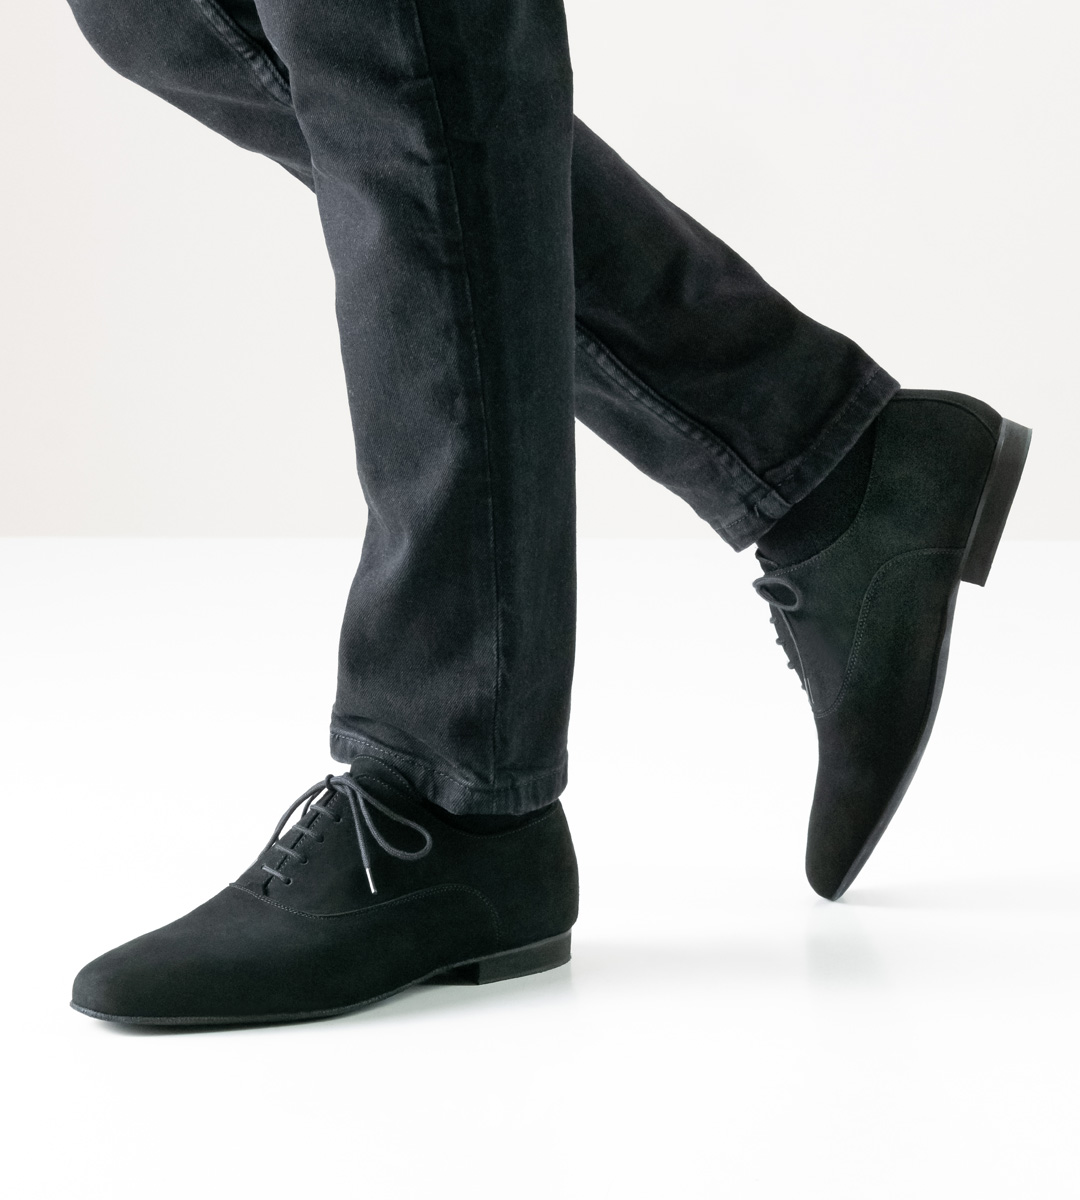 black men's dance shoe by Werner Kern in combination with black jeans